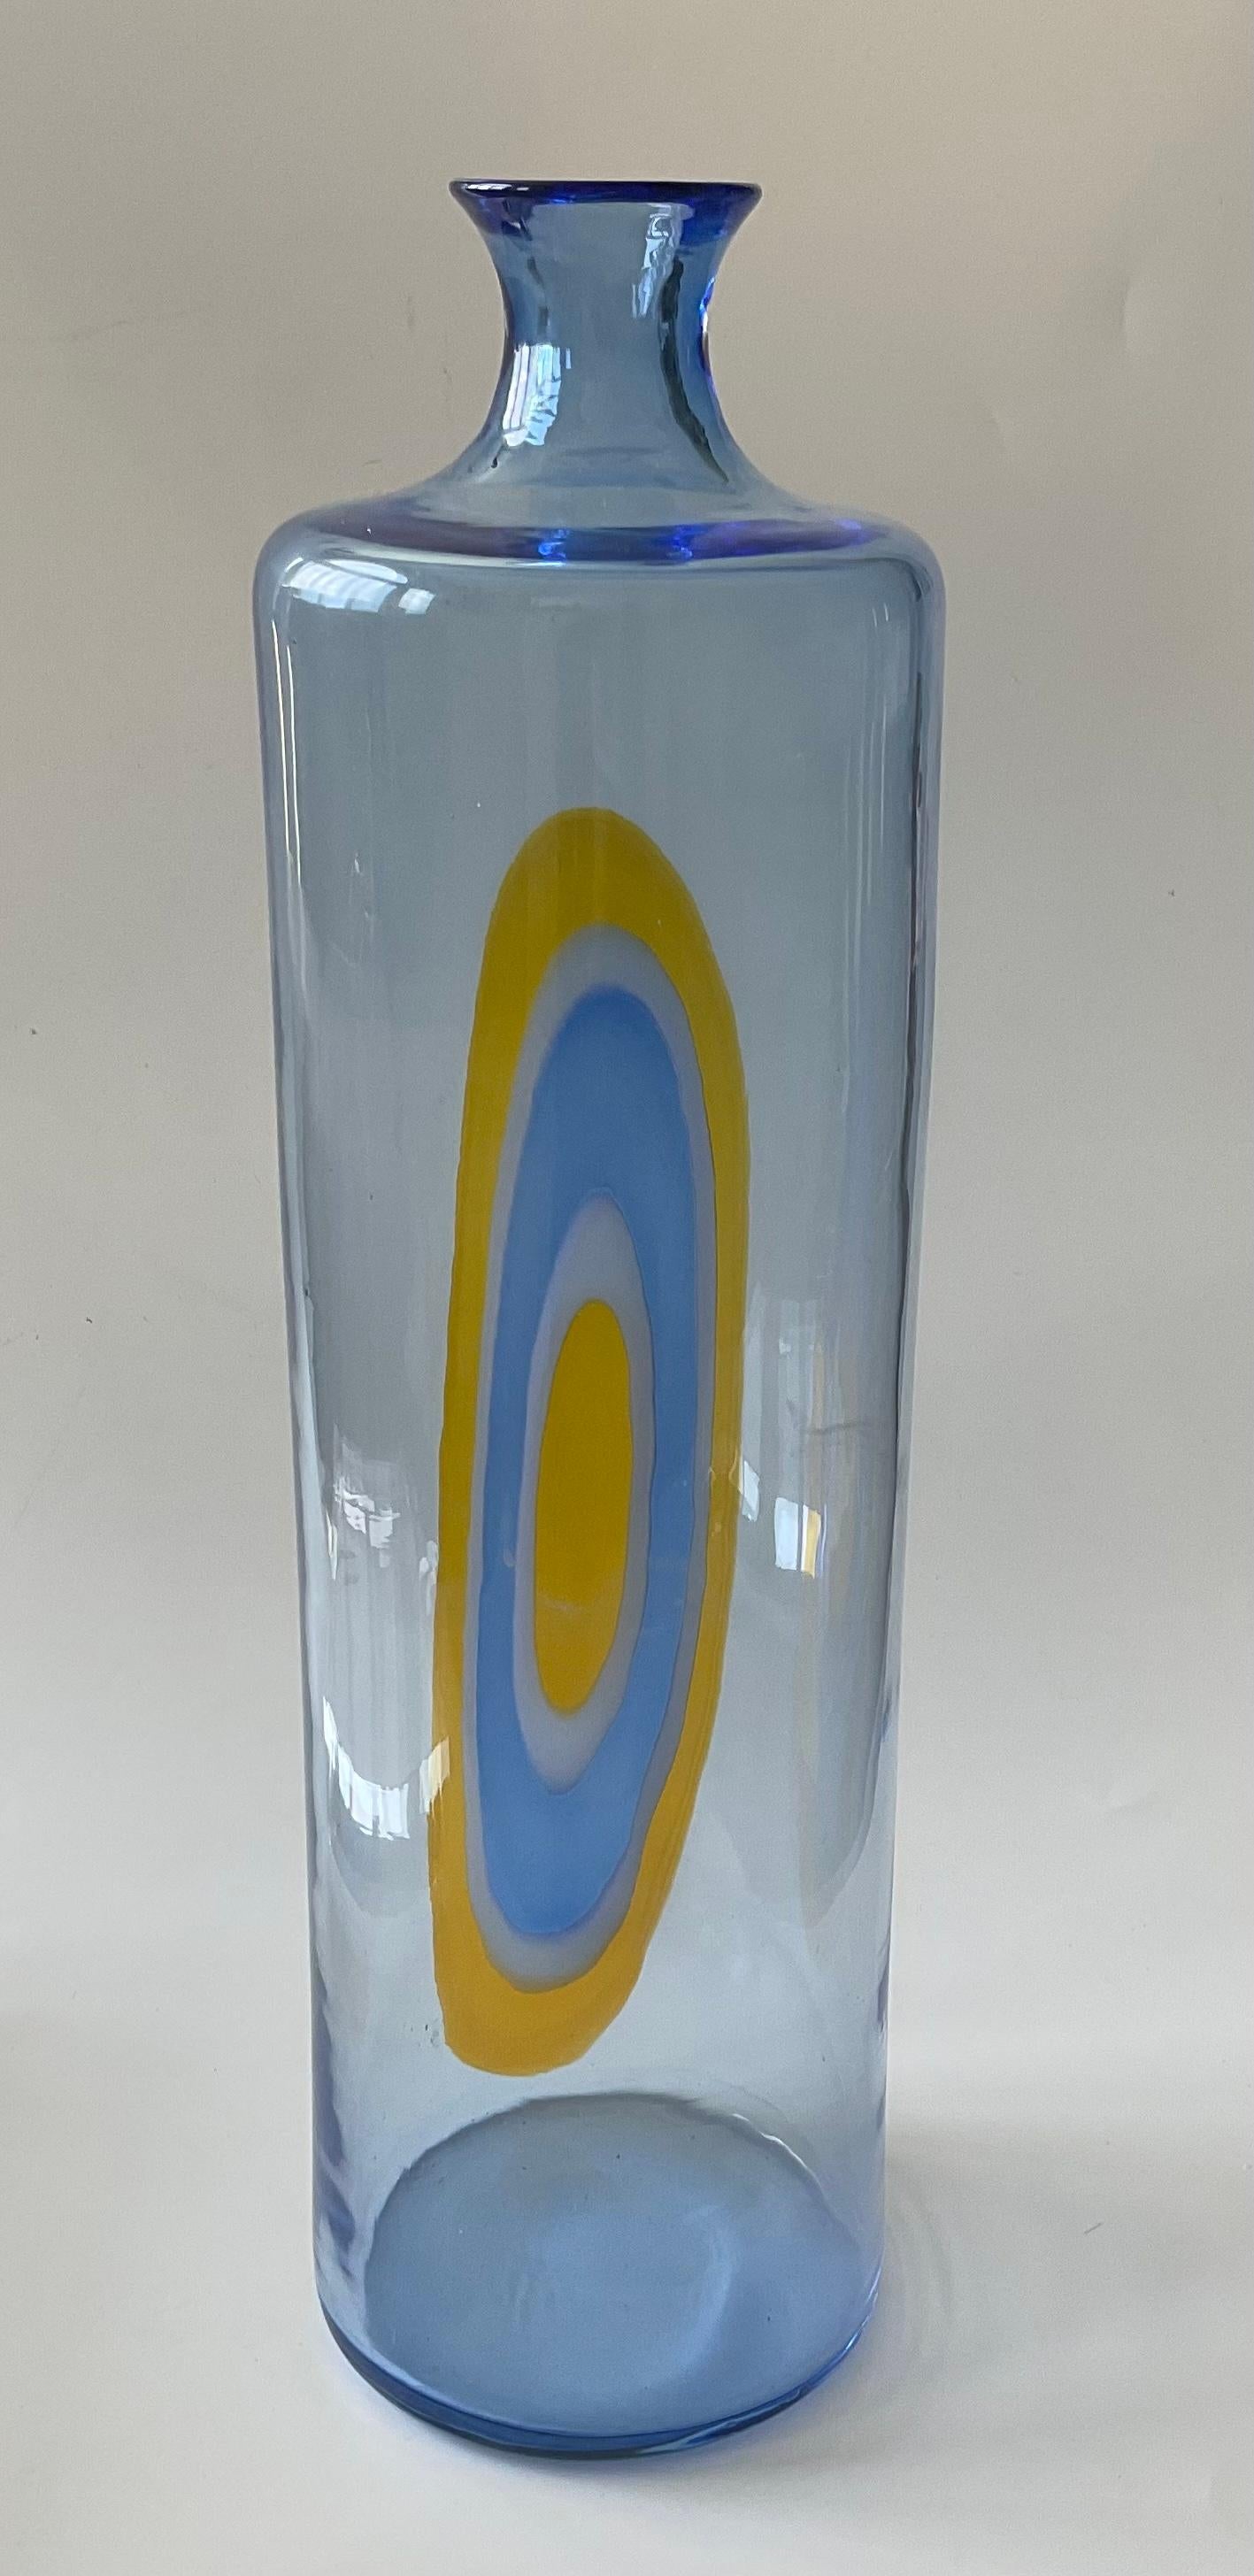 how to identify murano glass vase